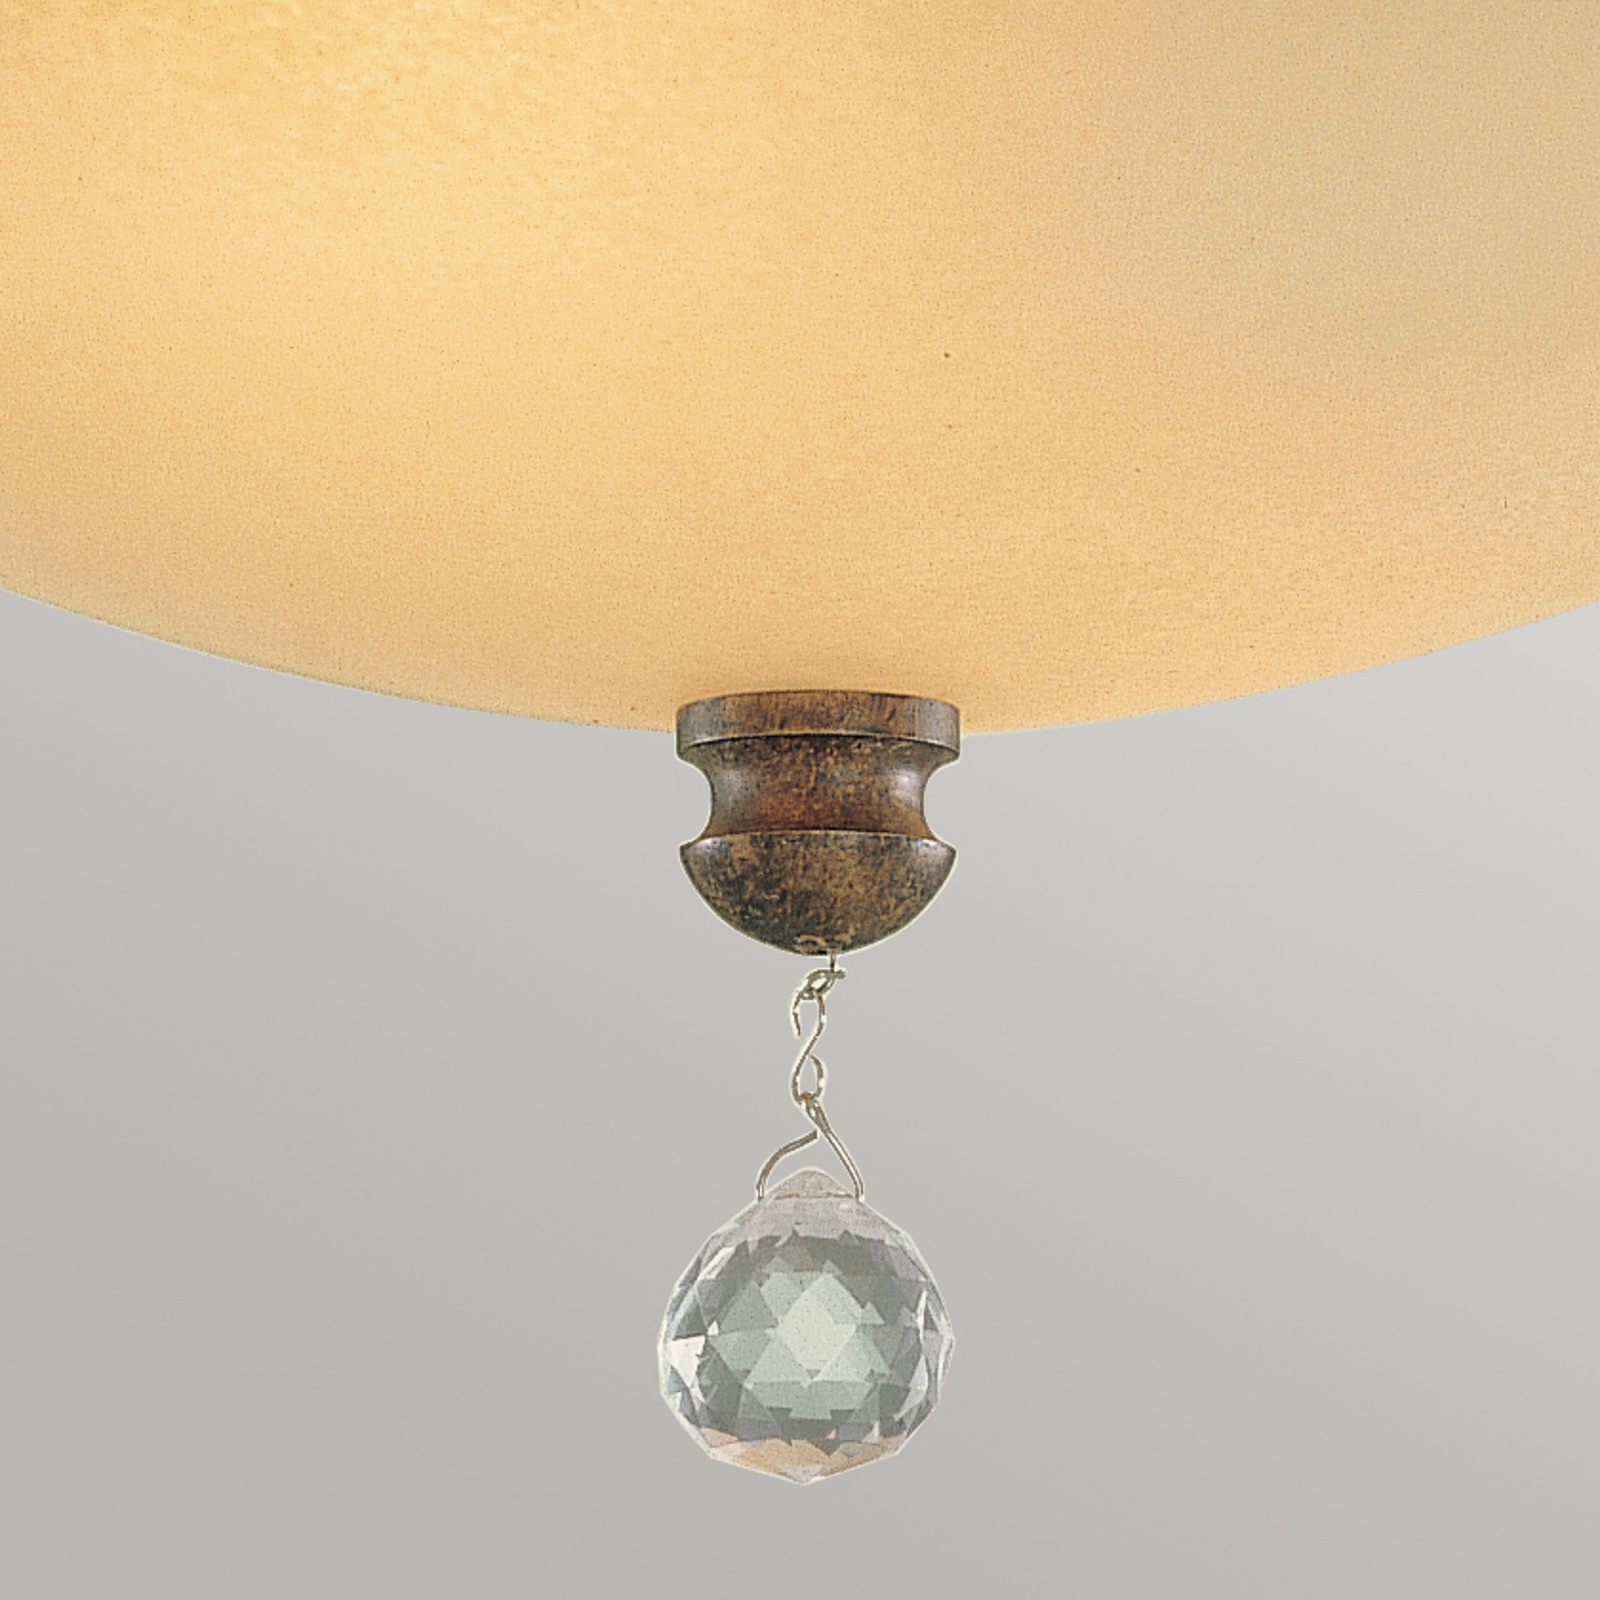 Chateau semi-flush ceiling light, glass